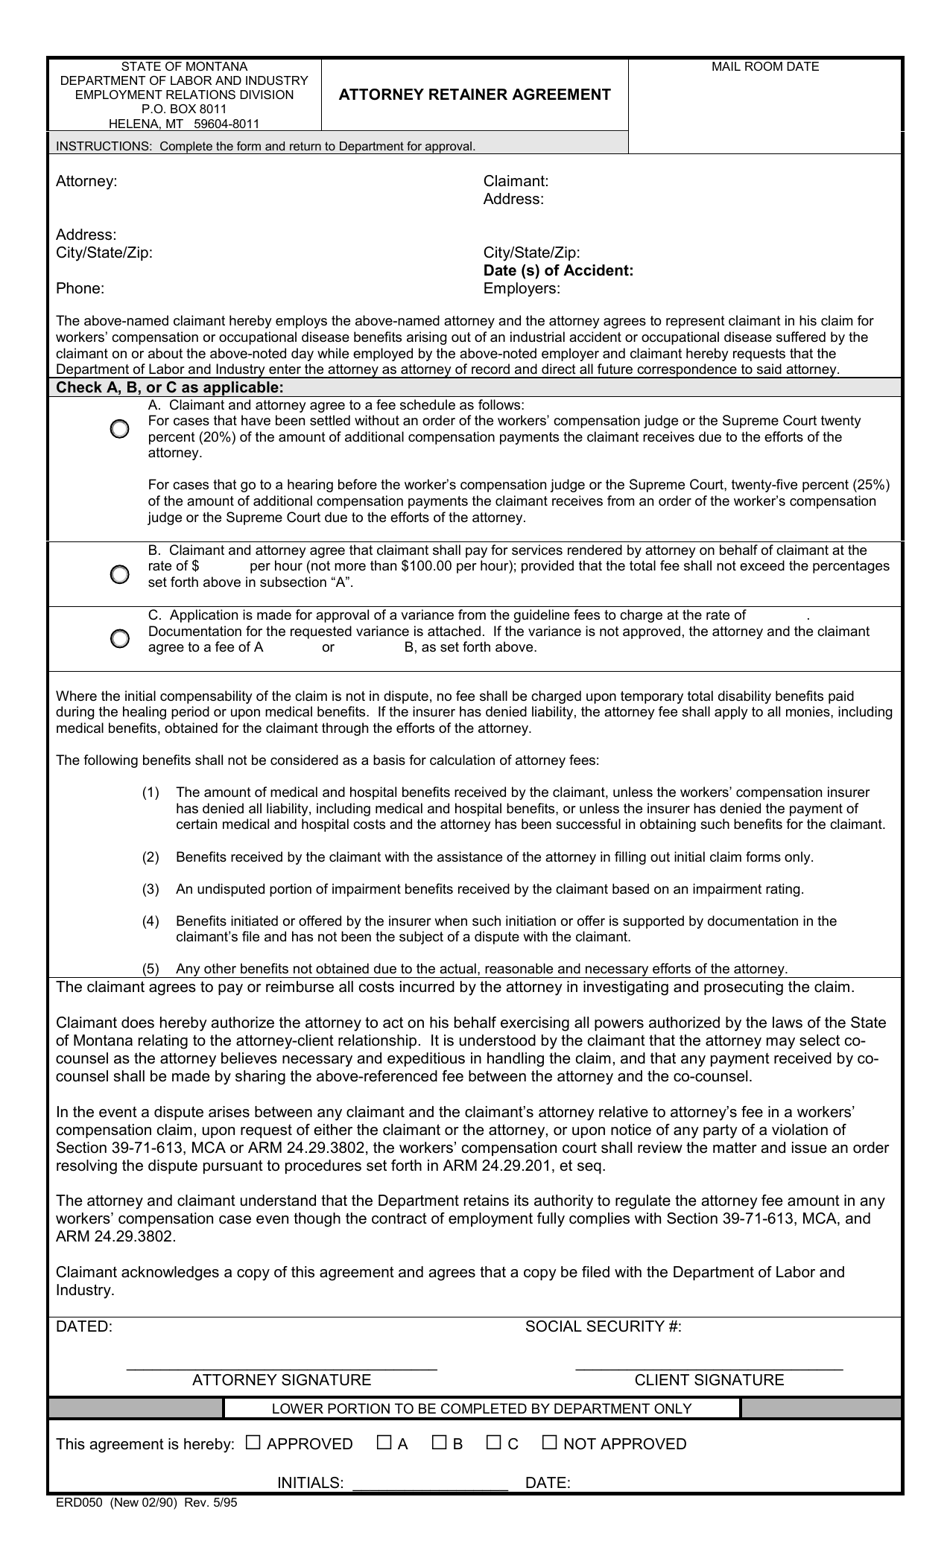 Form ERD050 Attorney Retainer Agreement - Montana, Page 1